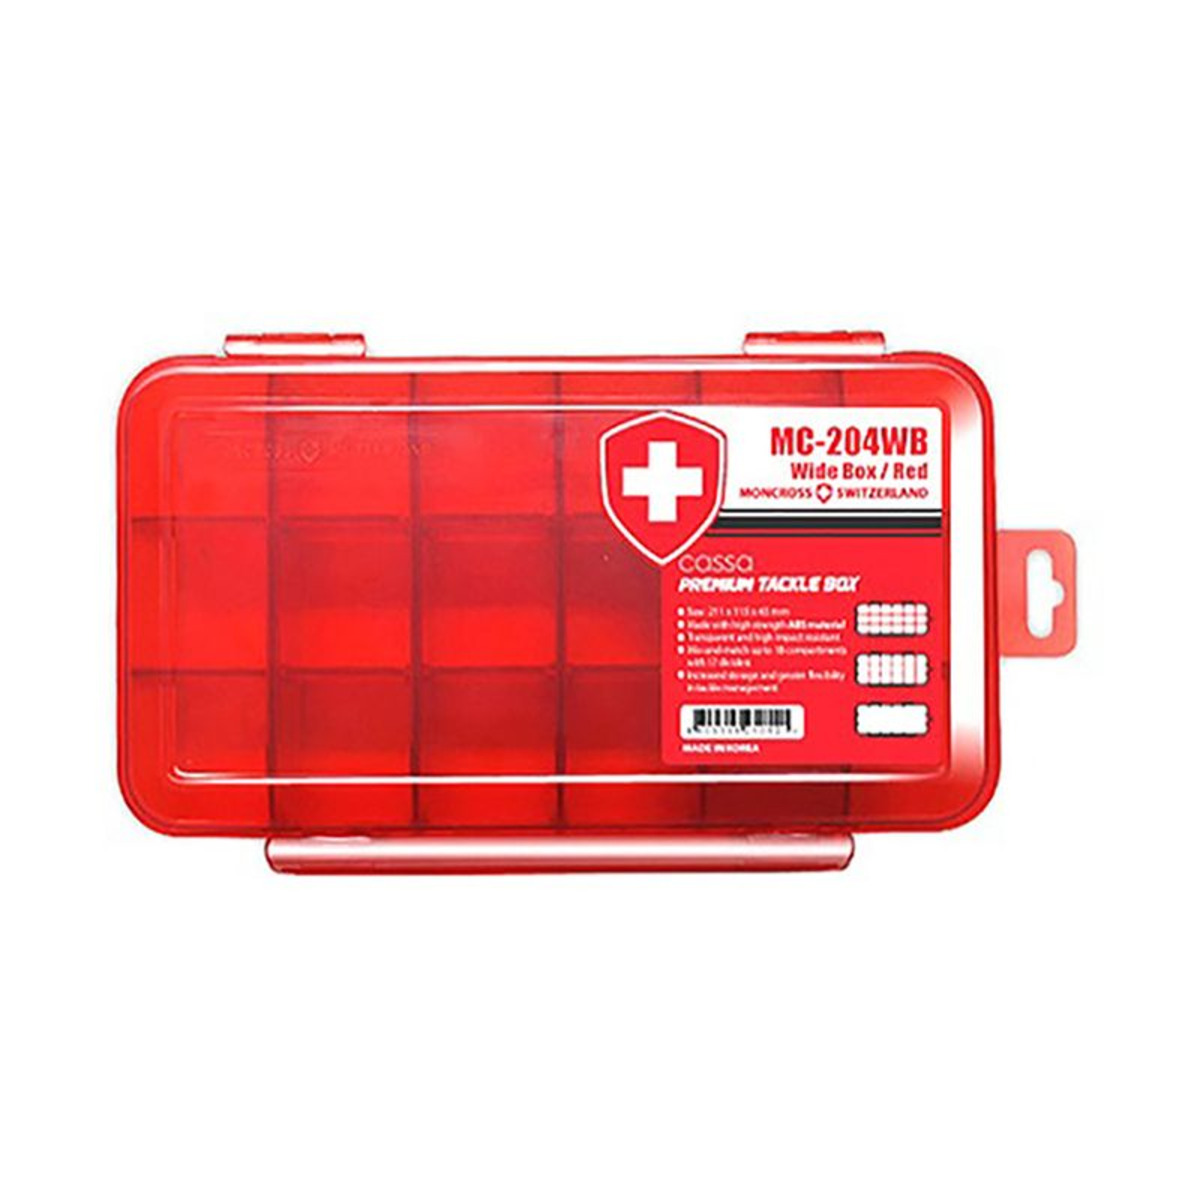 Moncross Switzerland Tackle Box Mc 204 Wb - Red